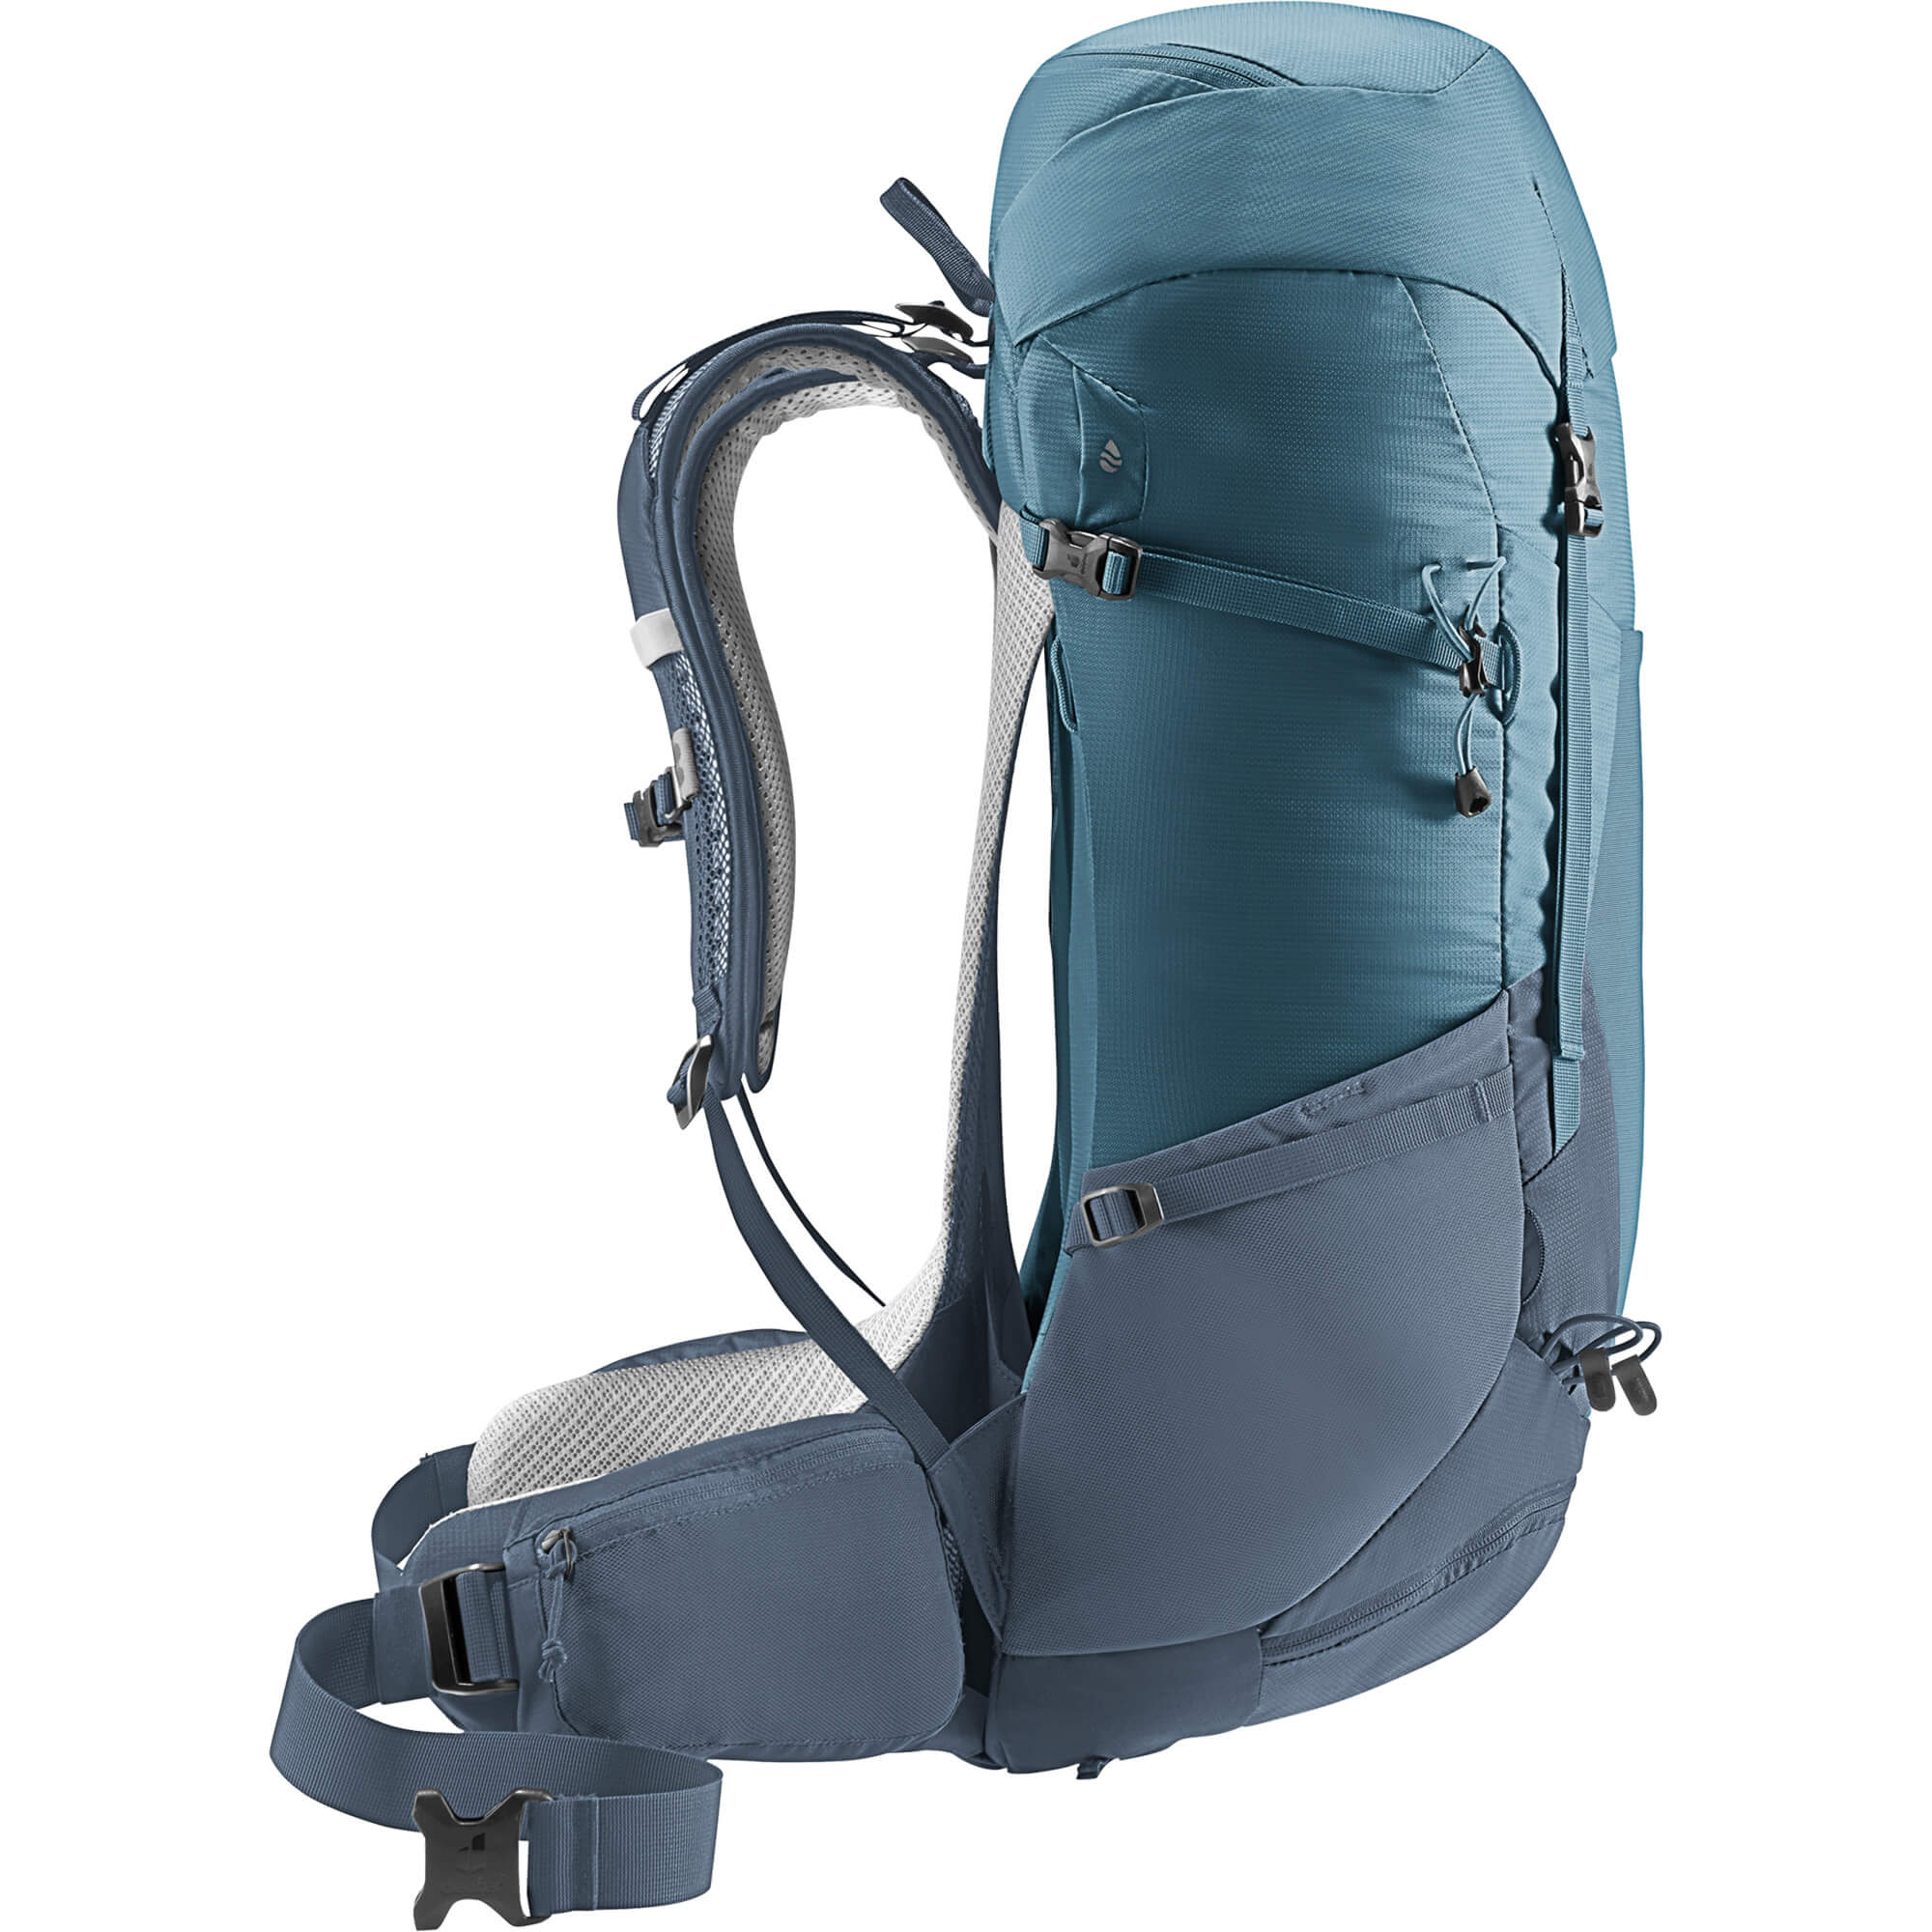 Deuter Futura 32 Daypack/Hiking Backpack